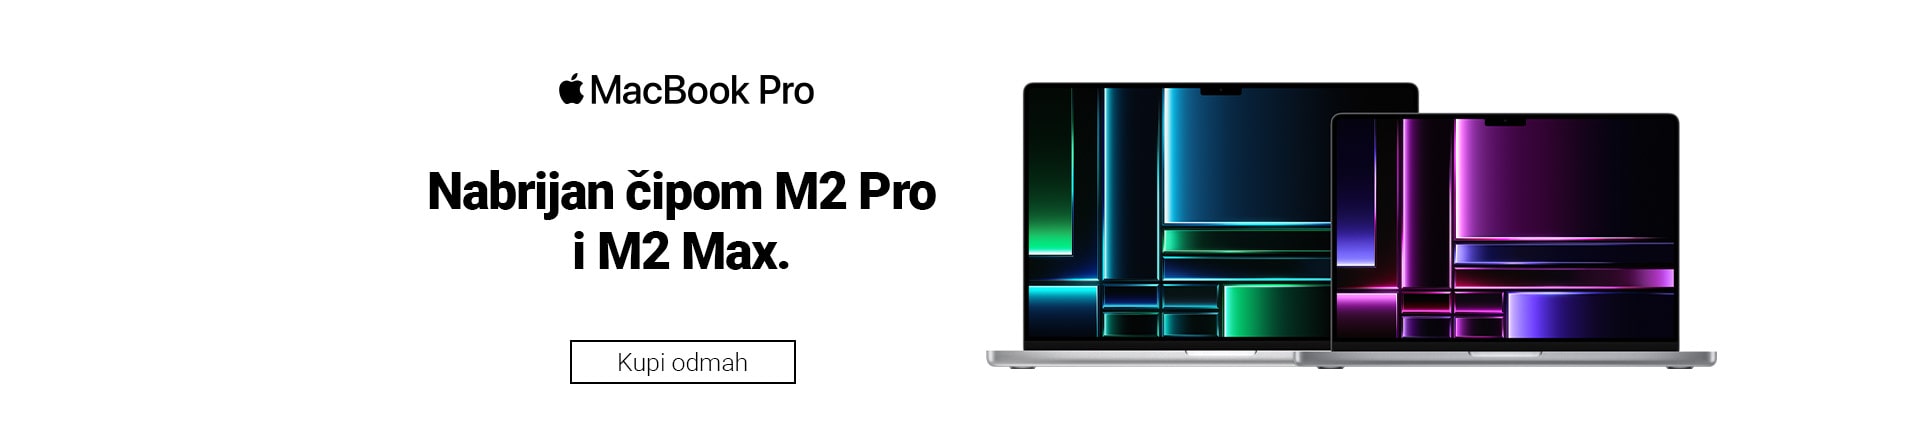 HR-macbook-pro-MOBILE-380-X-436-min.jpg